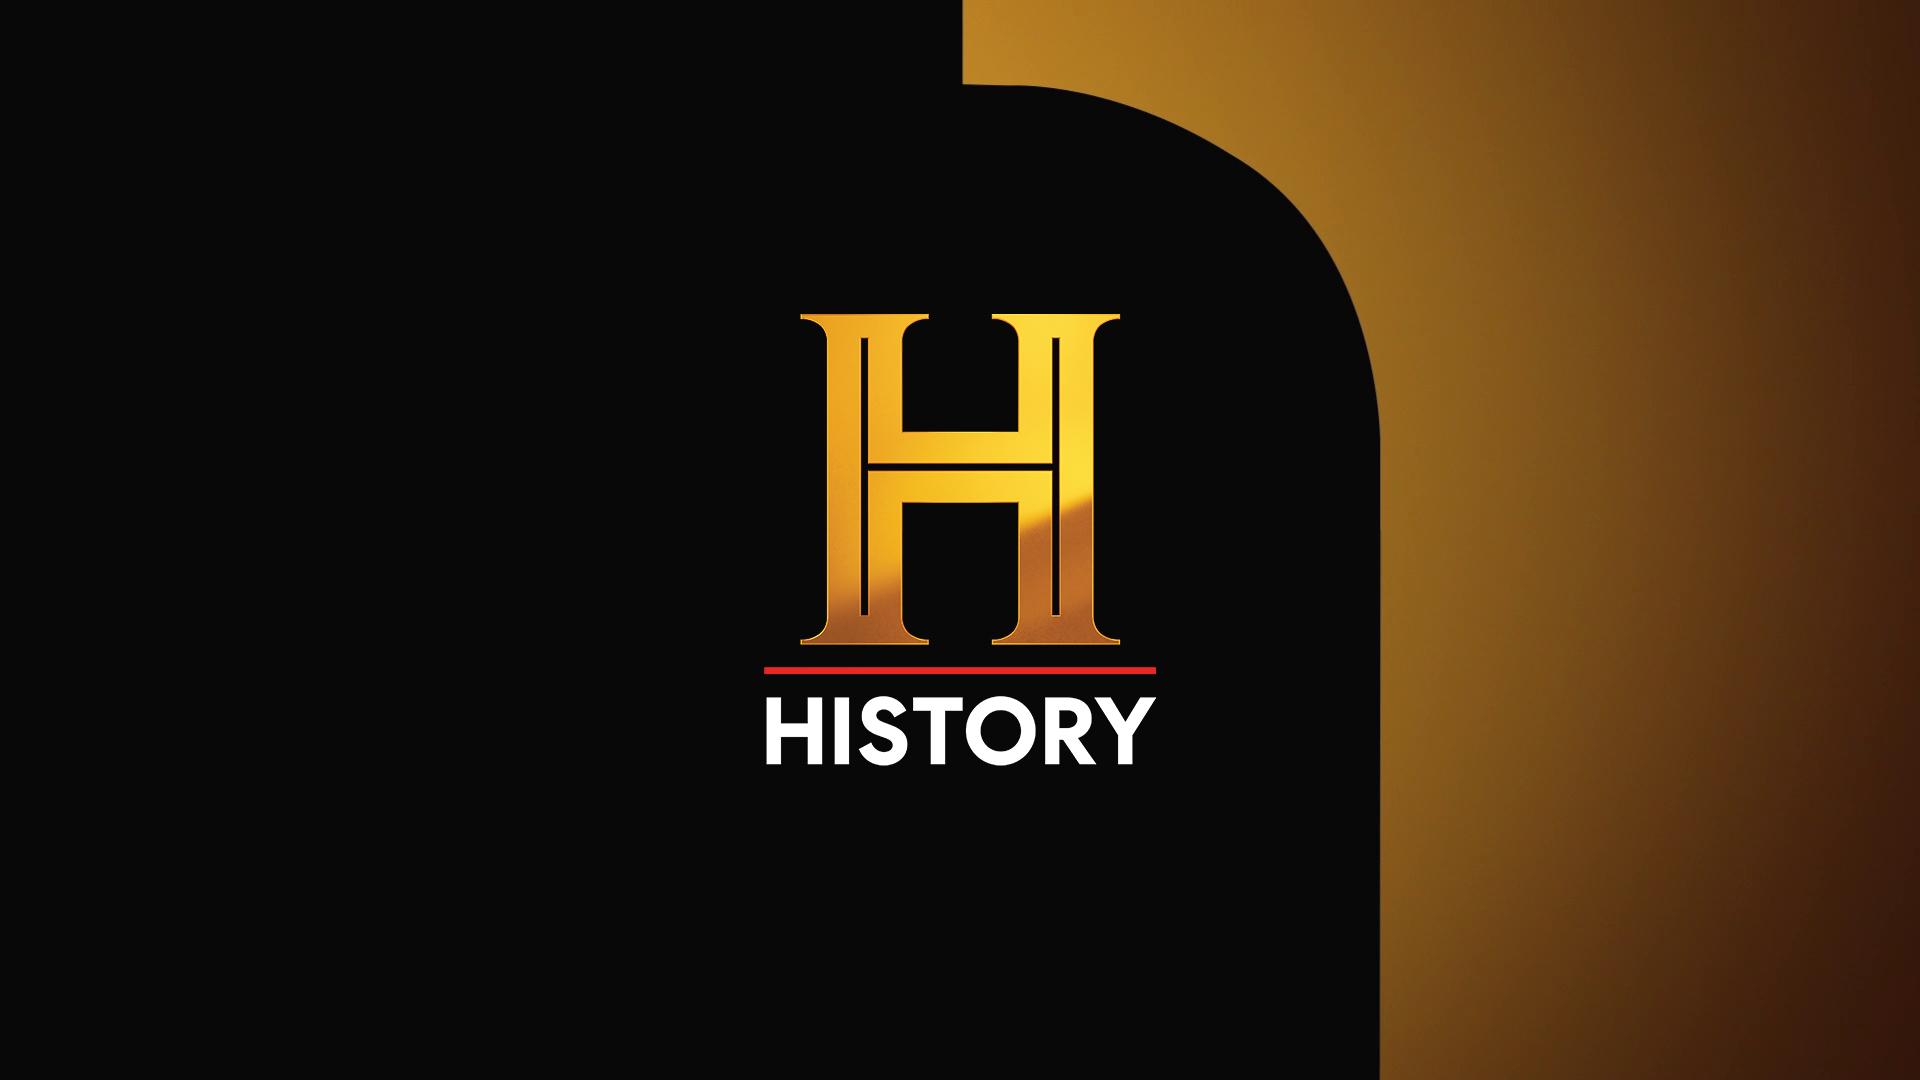 www.history.com